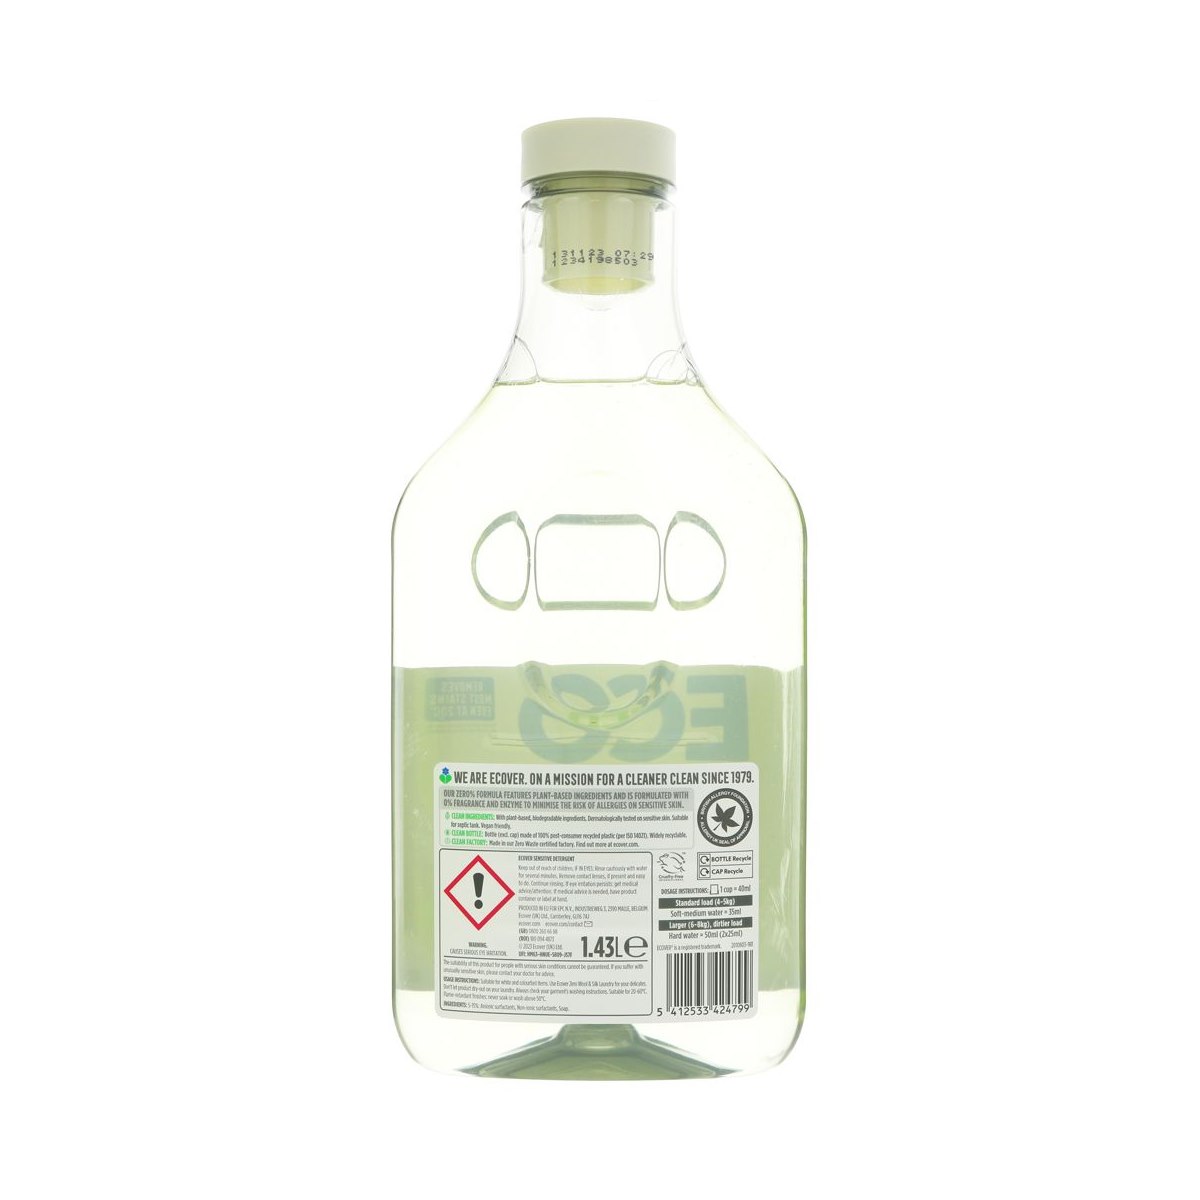 Ecover Zero Sensitive Non-Bio Laundry Liquid instructions